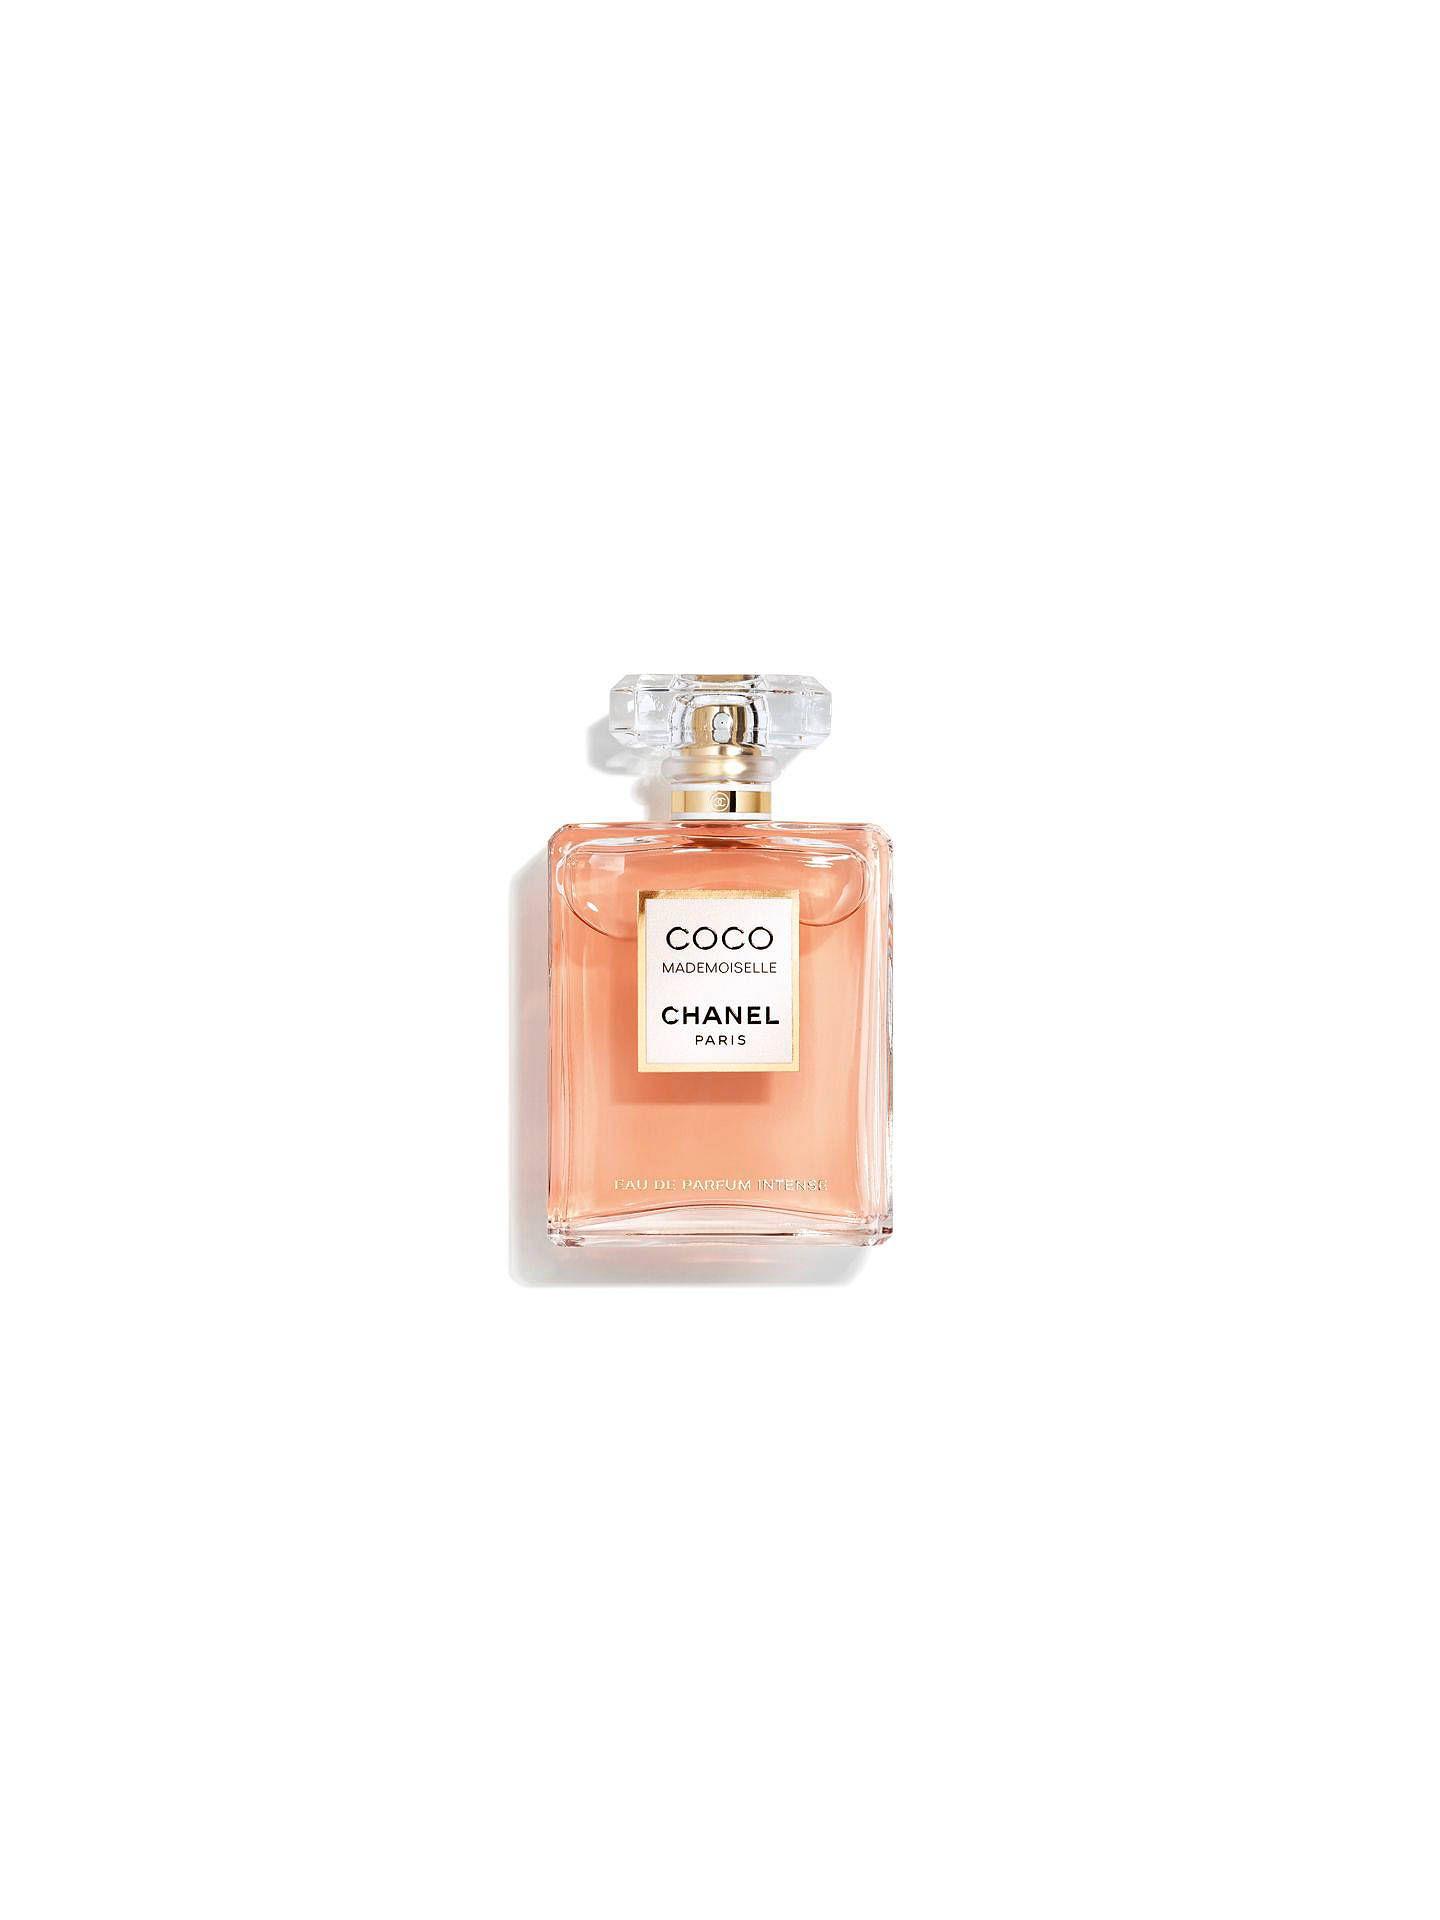 Coco Chanel Perfume Logo - CHANEL COCO MADEMOISELLE Eau de Parfum Intense Spray at John Lewis ...